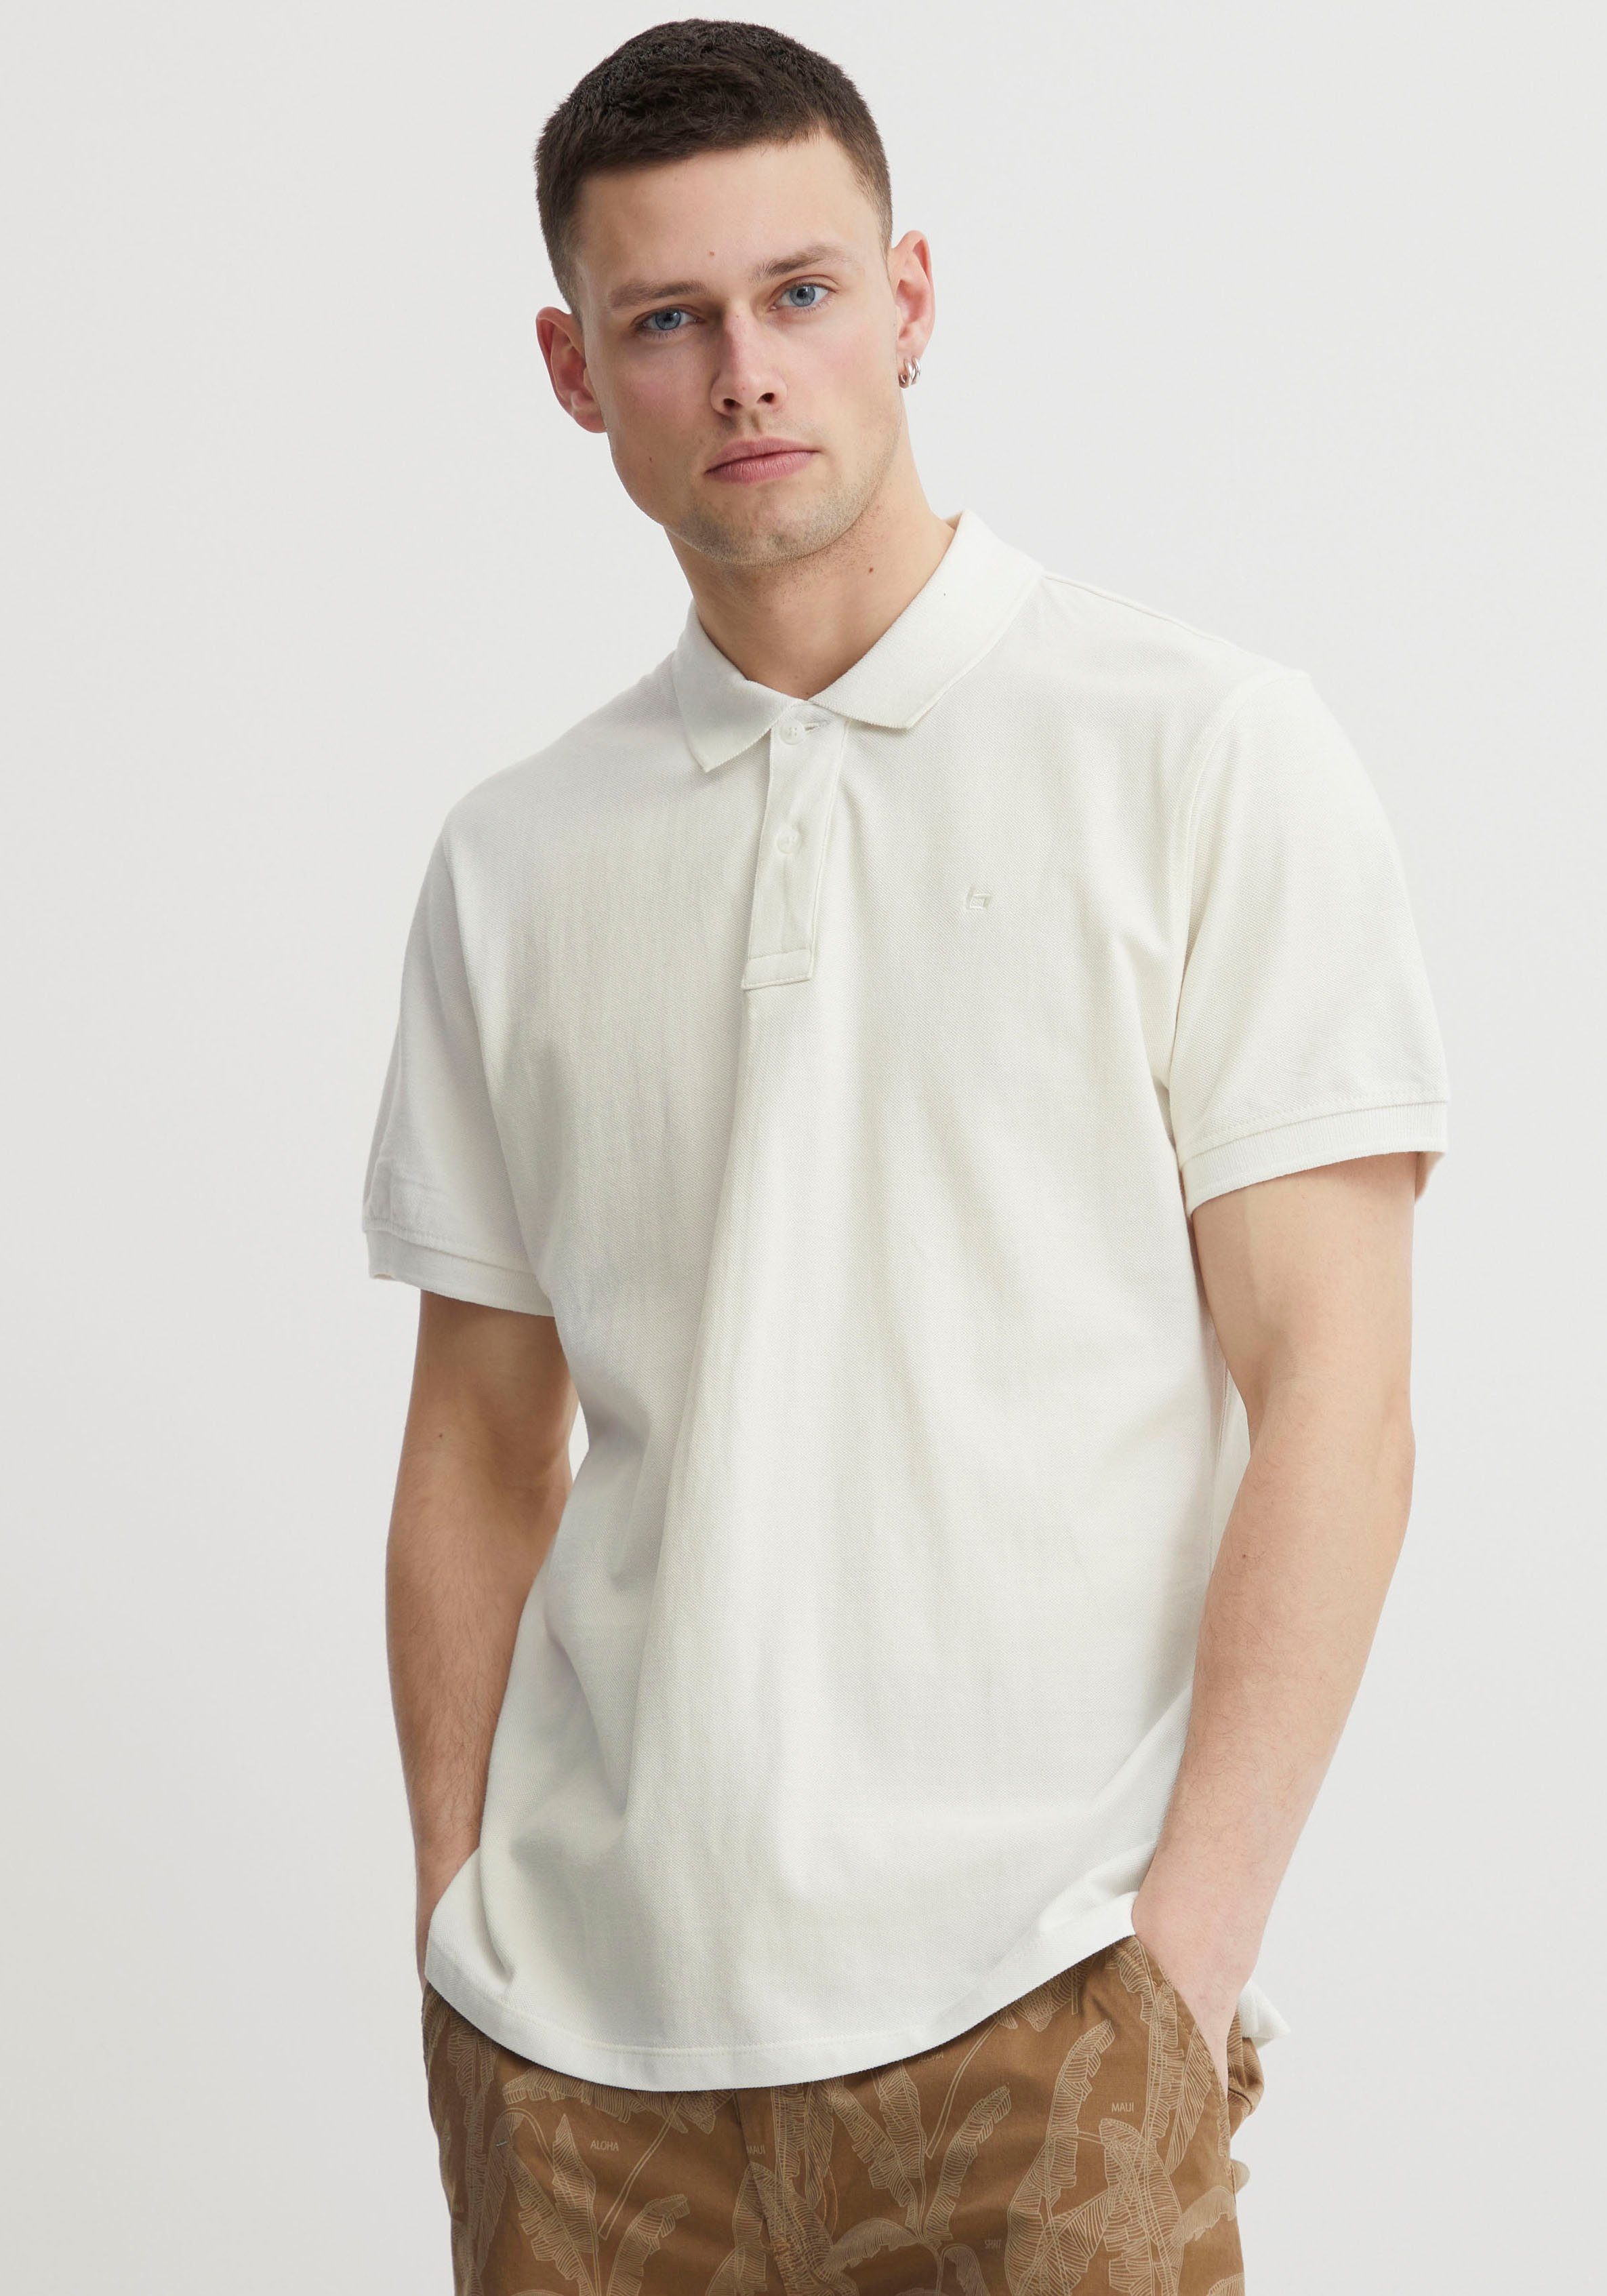 BL-Poloshirt white Blend Poloshirt